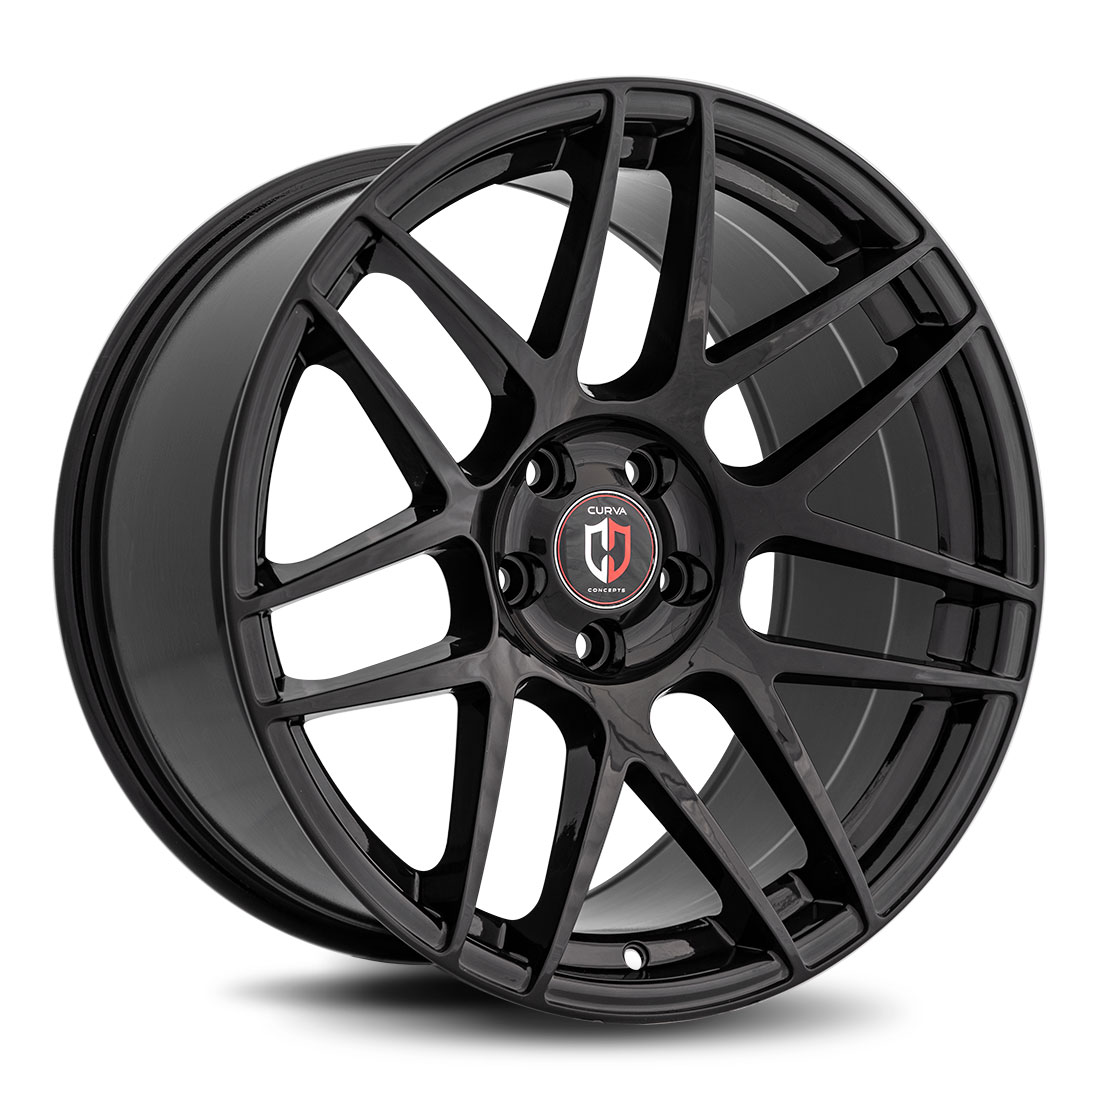 Curva Concepts C300 19 Inch Gloss Black Aftermarket Wheels